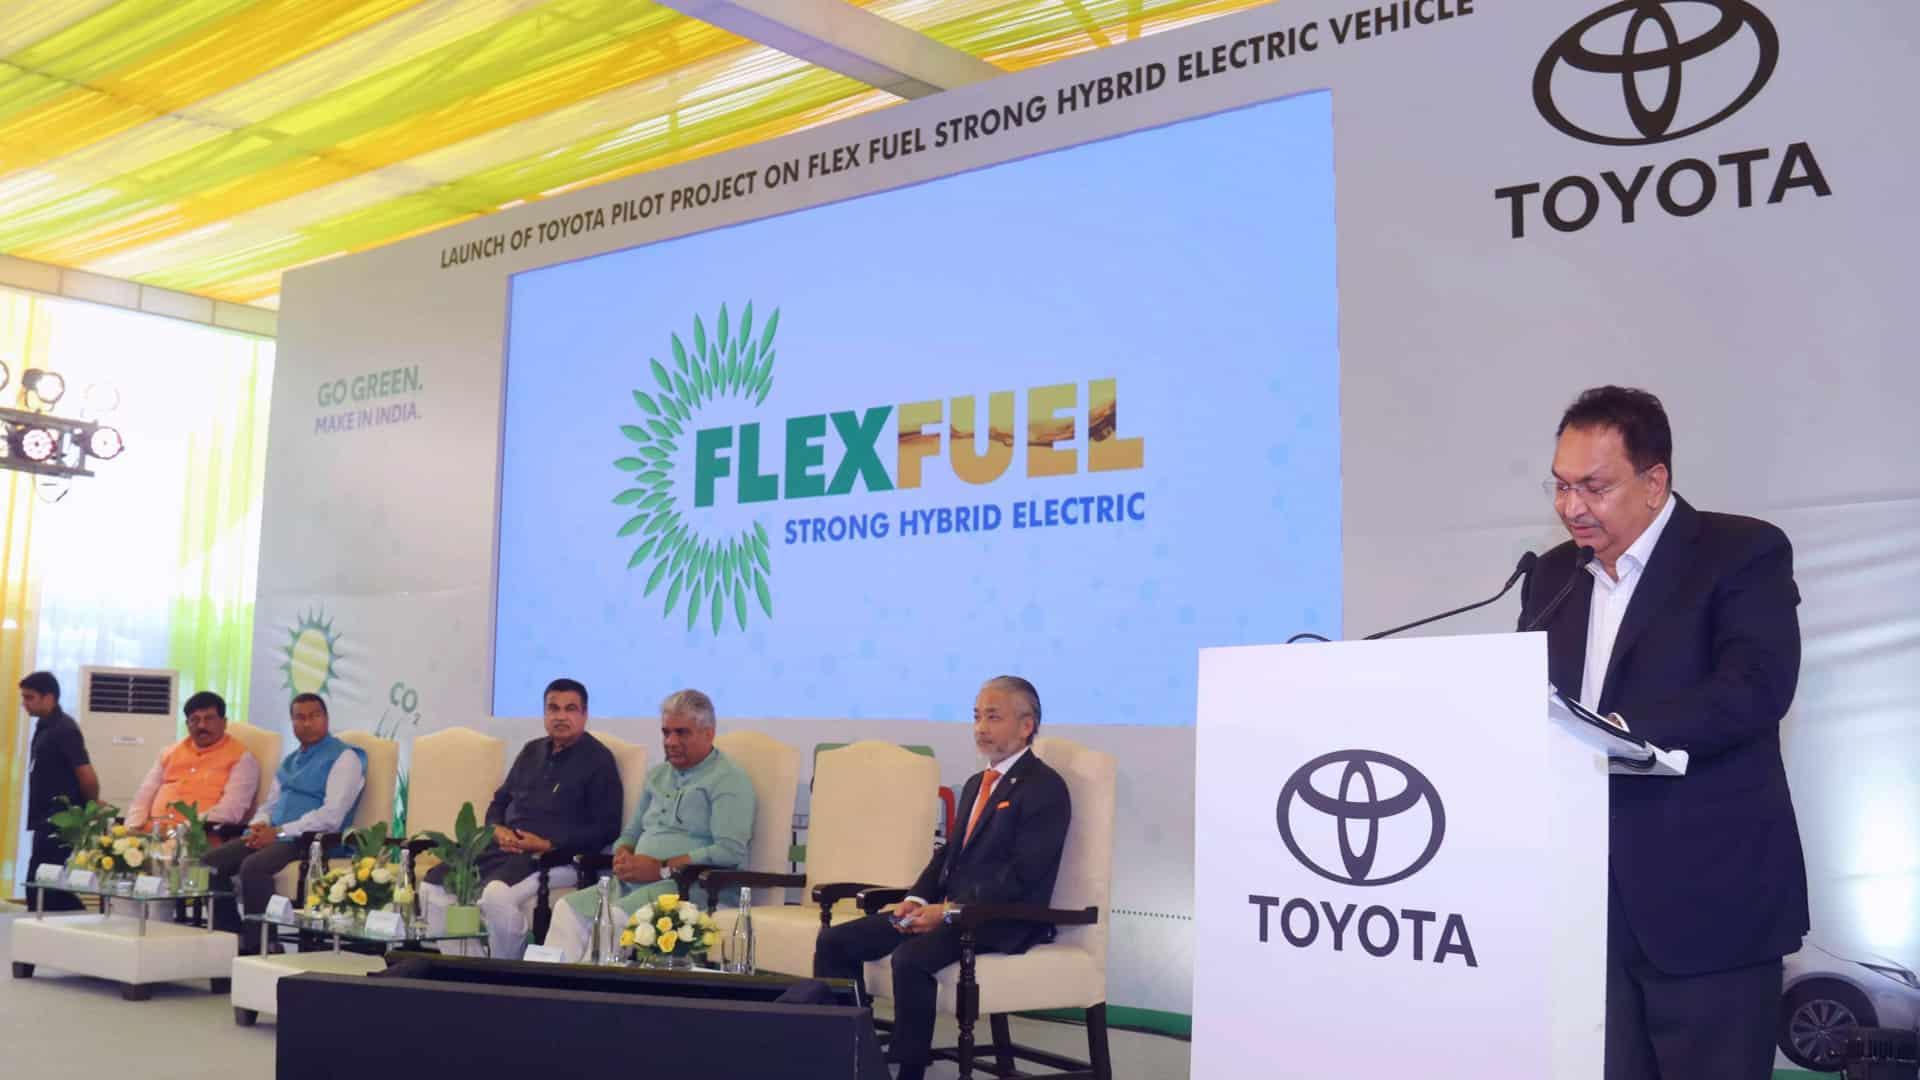 Nitin Gadkari introduces Toyota pilot project on Flex-Fuel Strong Hybrid EV_50.1